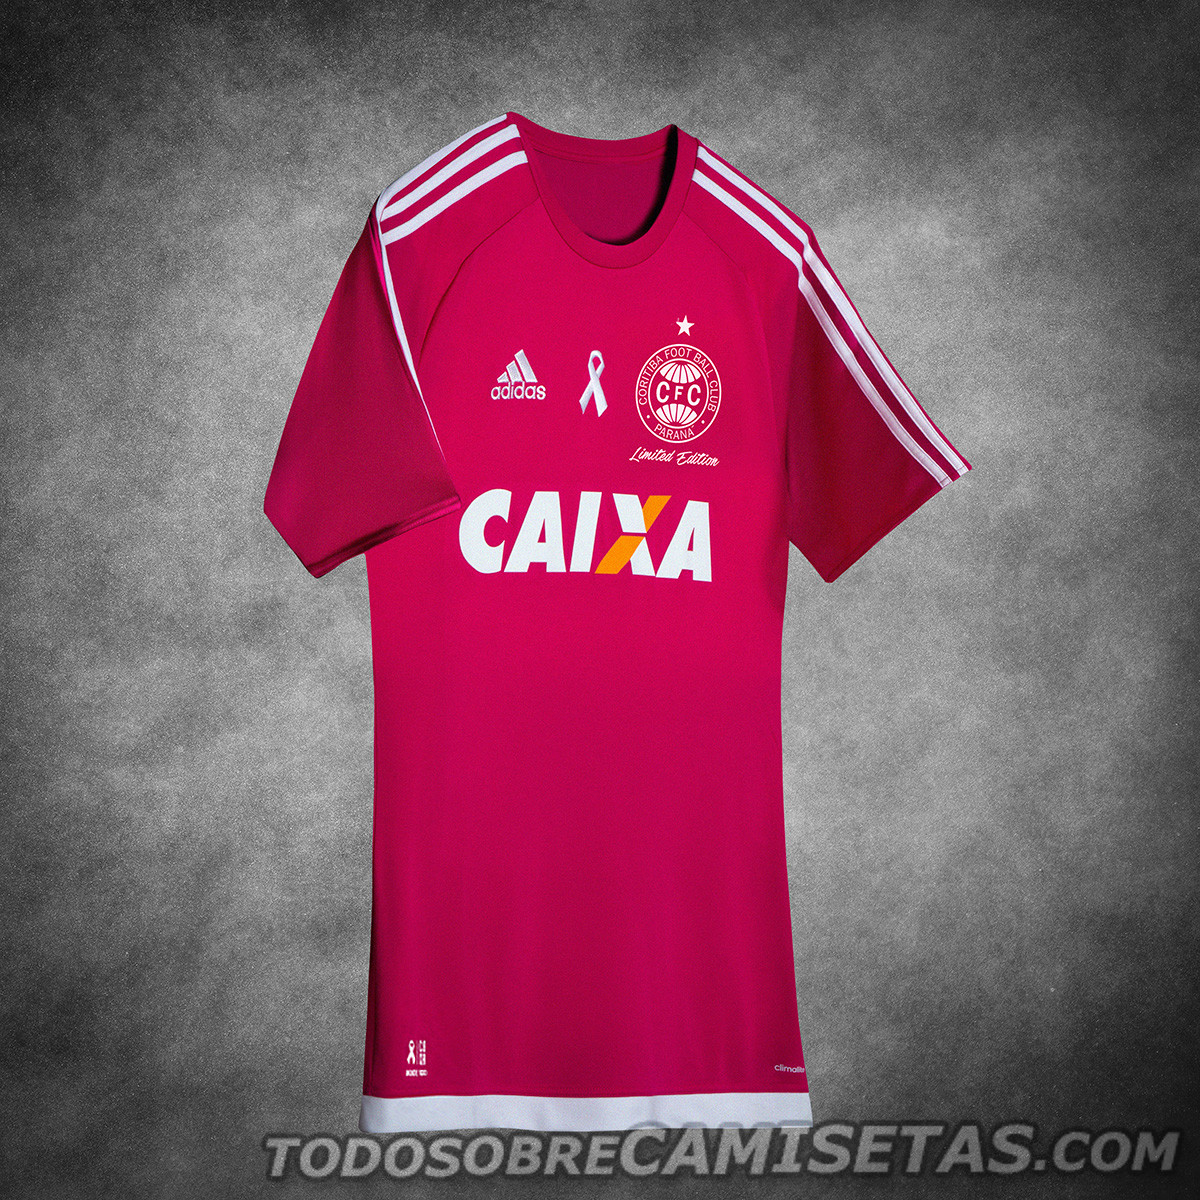 Camiseta rosa adidas de Coritiba 2016